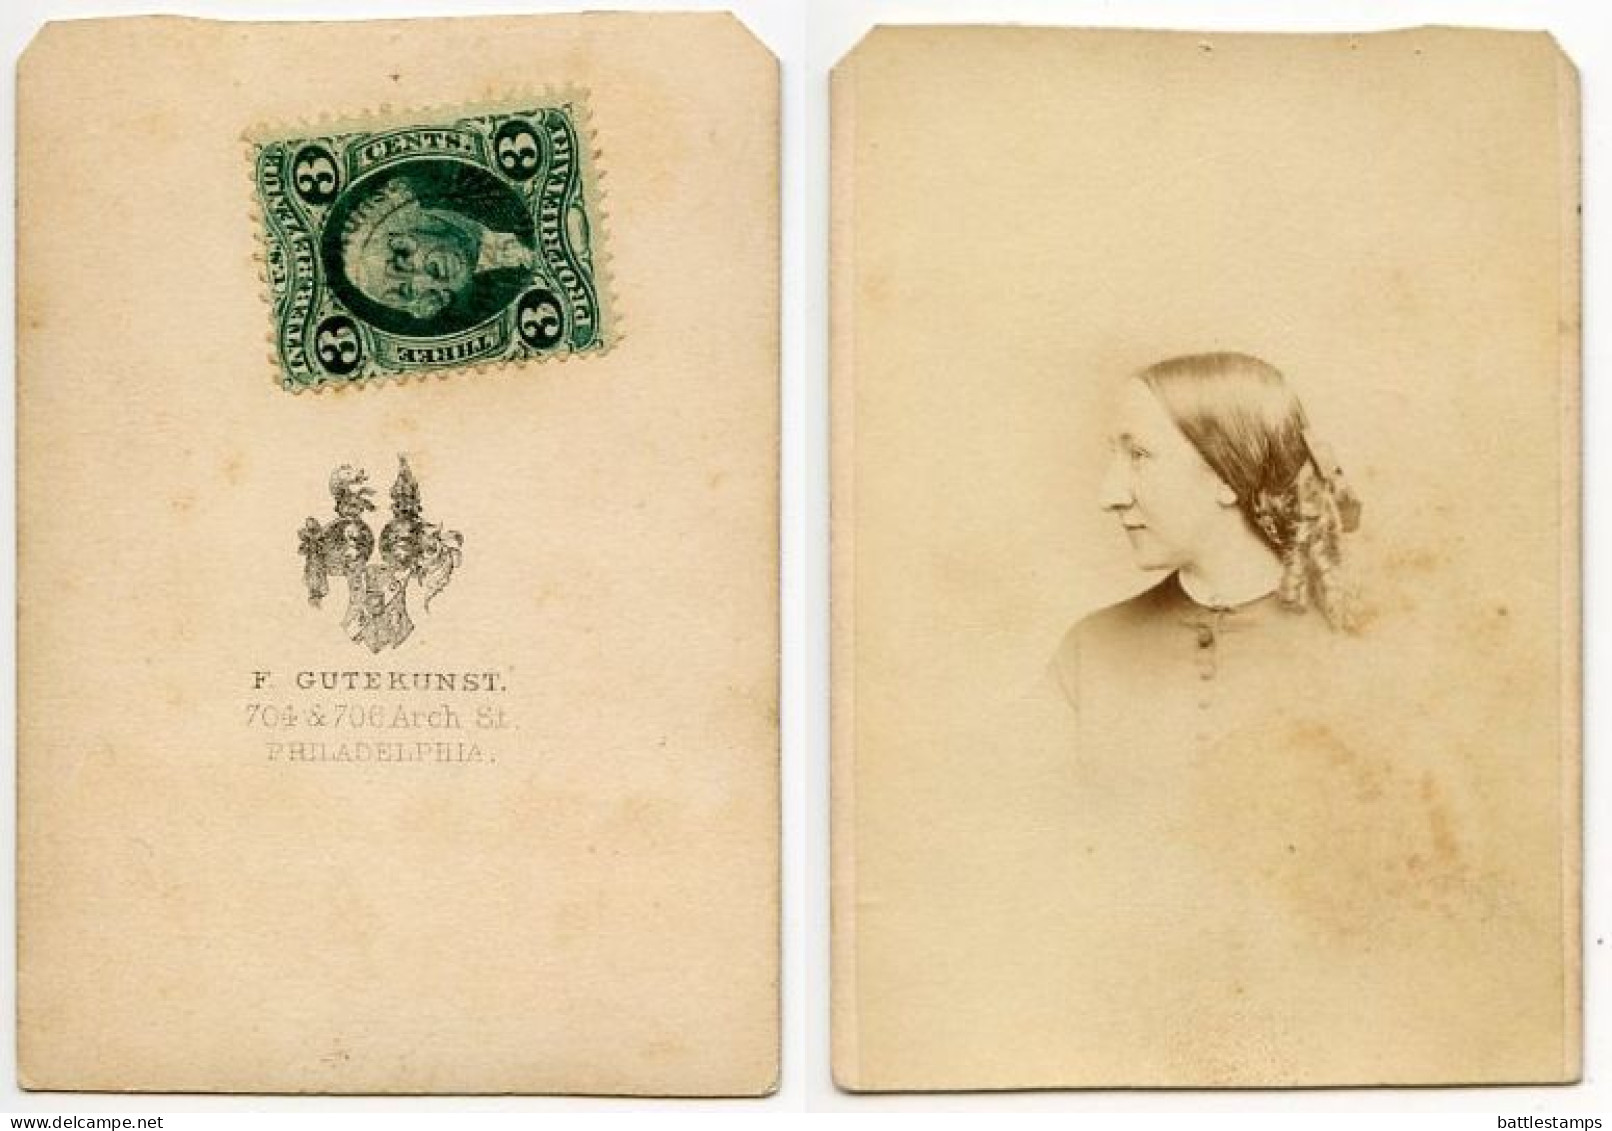 United States 1860‘s Photograph, Woman - F. Gutekun St., Philadelphia Pennsylvania, Scott R18c Revenue Stamp - Fiscale Zegels